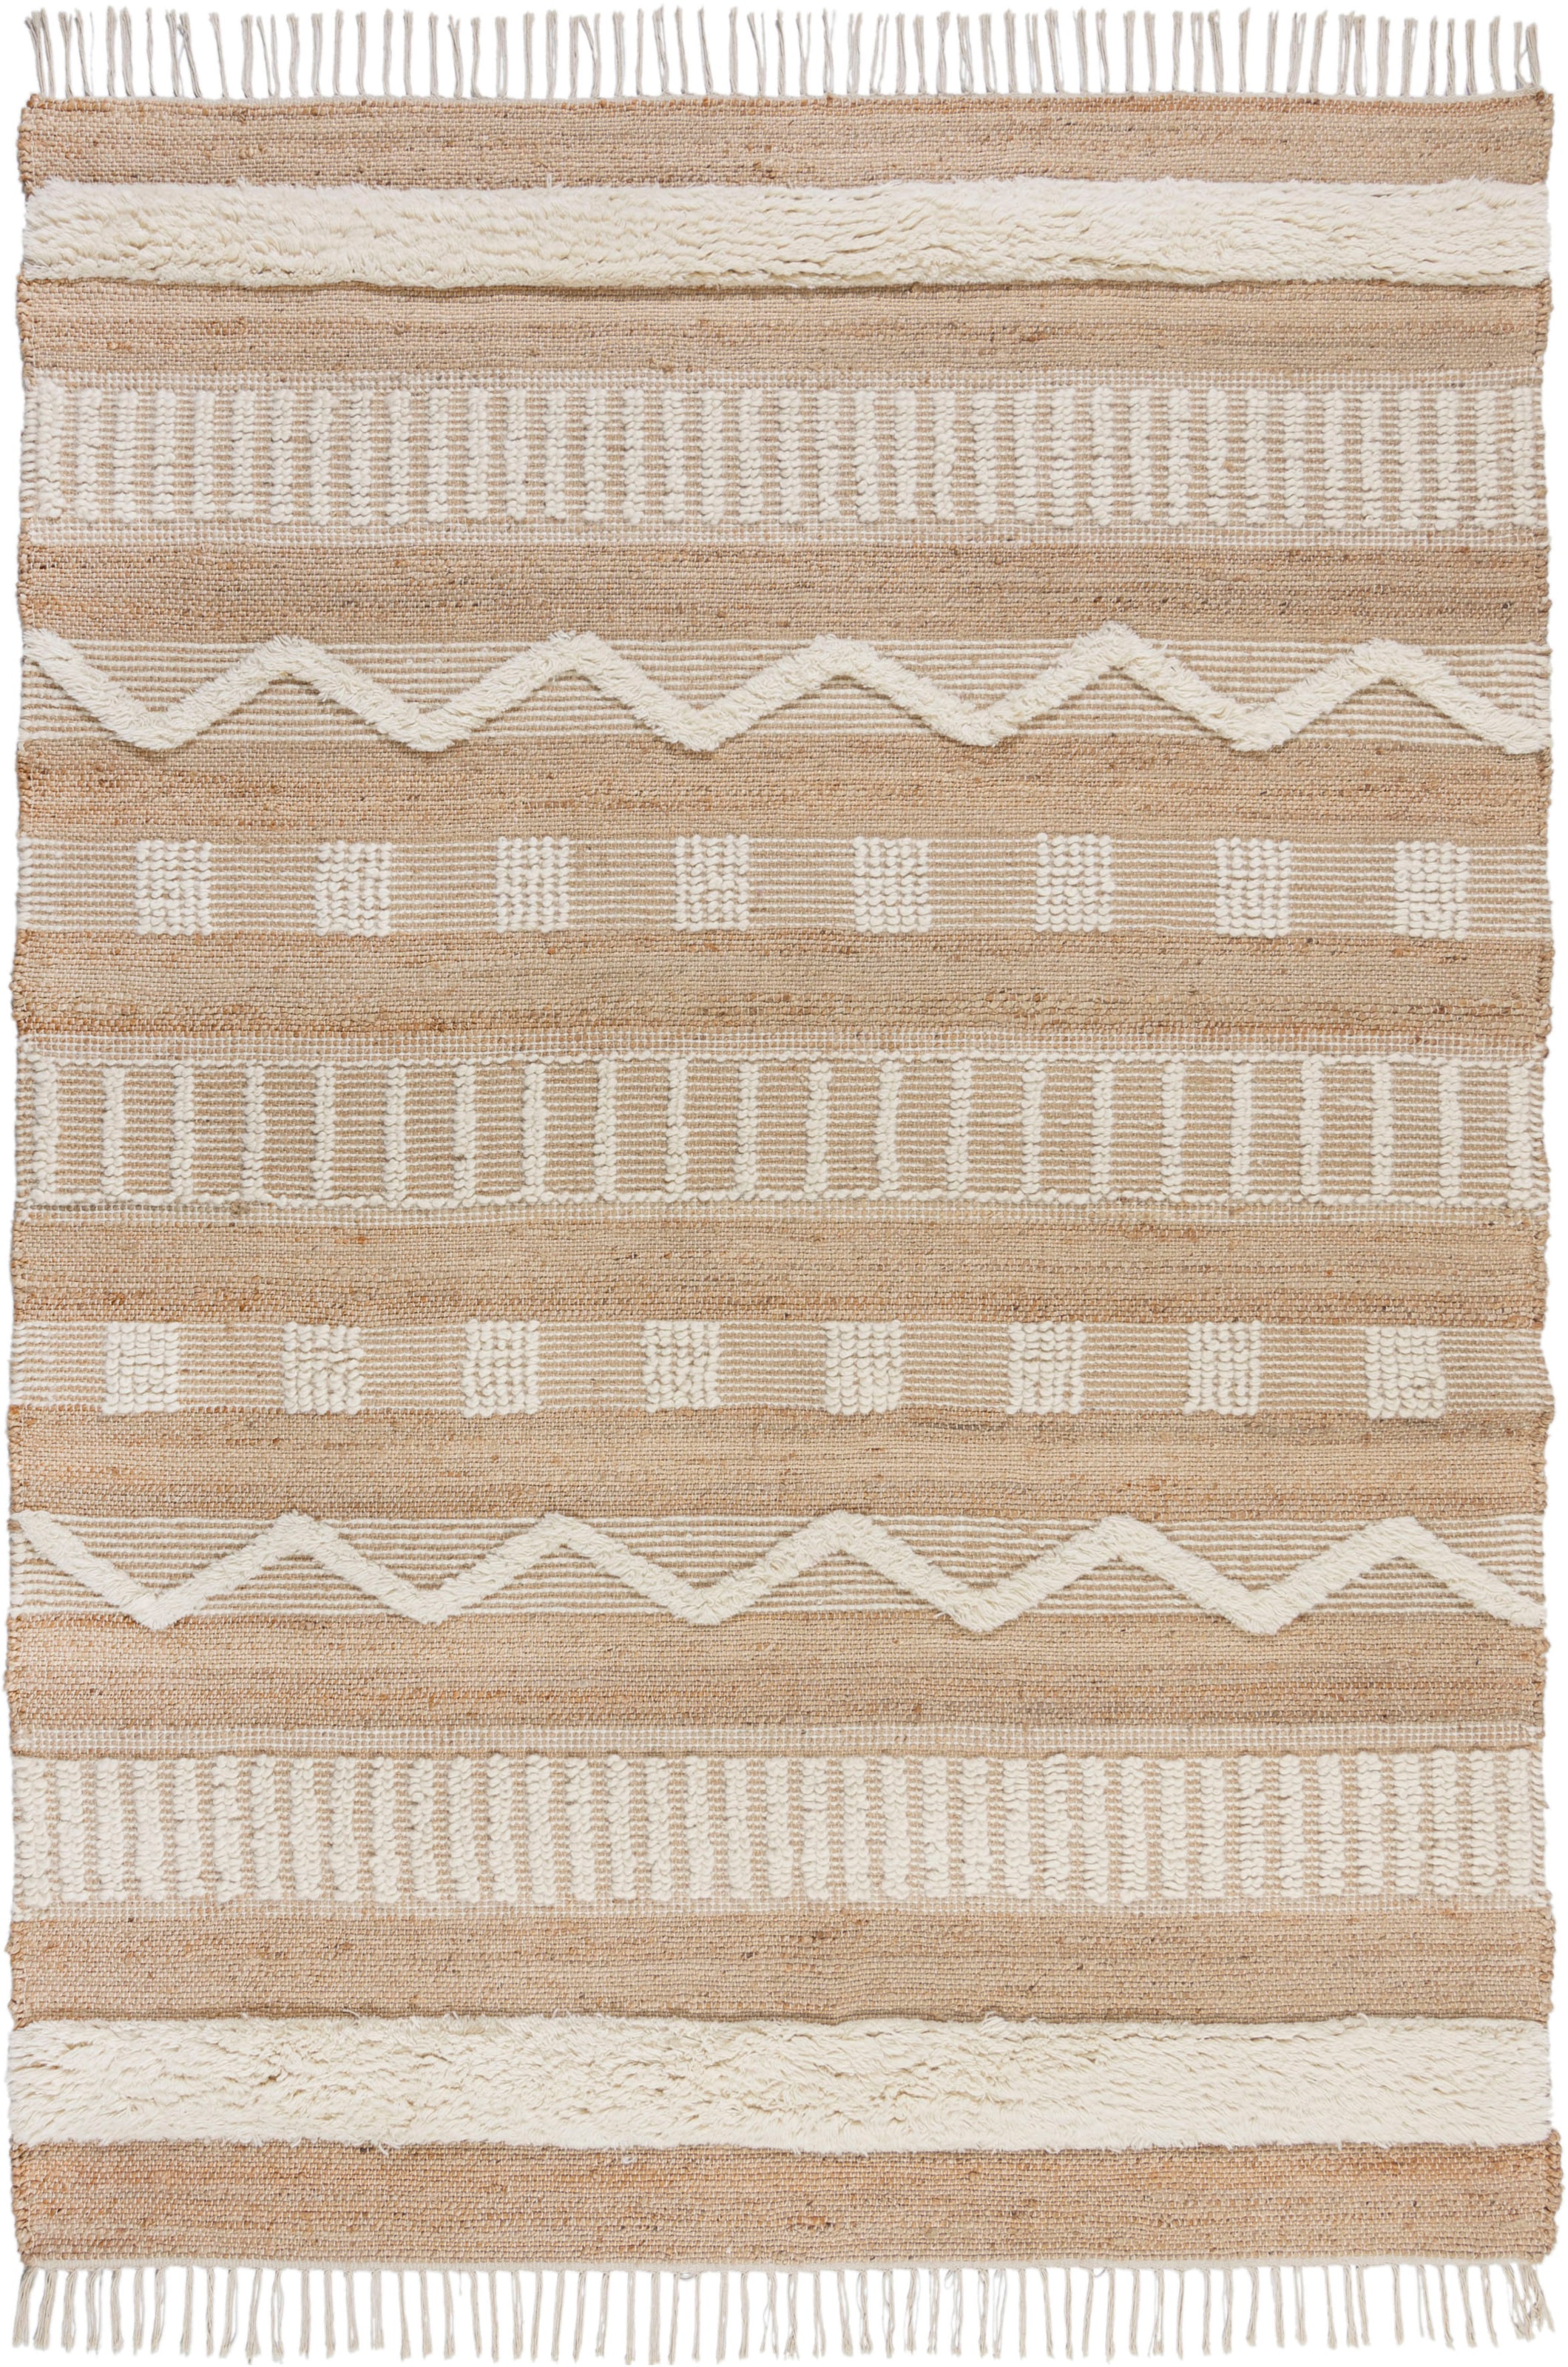 Teppich »Medina«, rechteckig, Boho-Look, aus Naturfasern wie Wolle & Jute